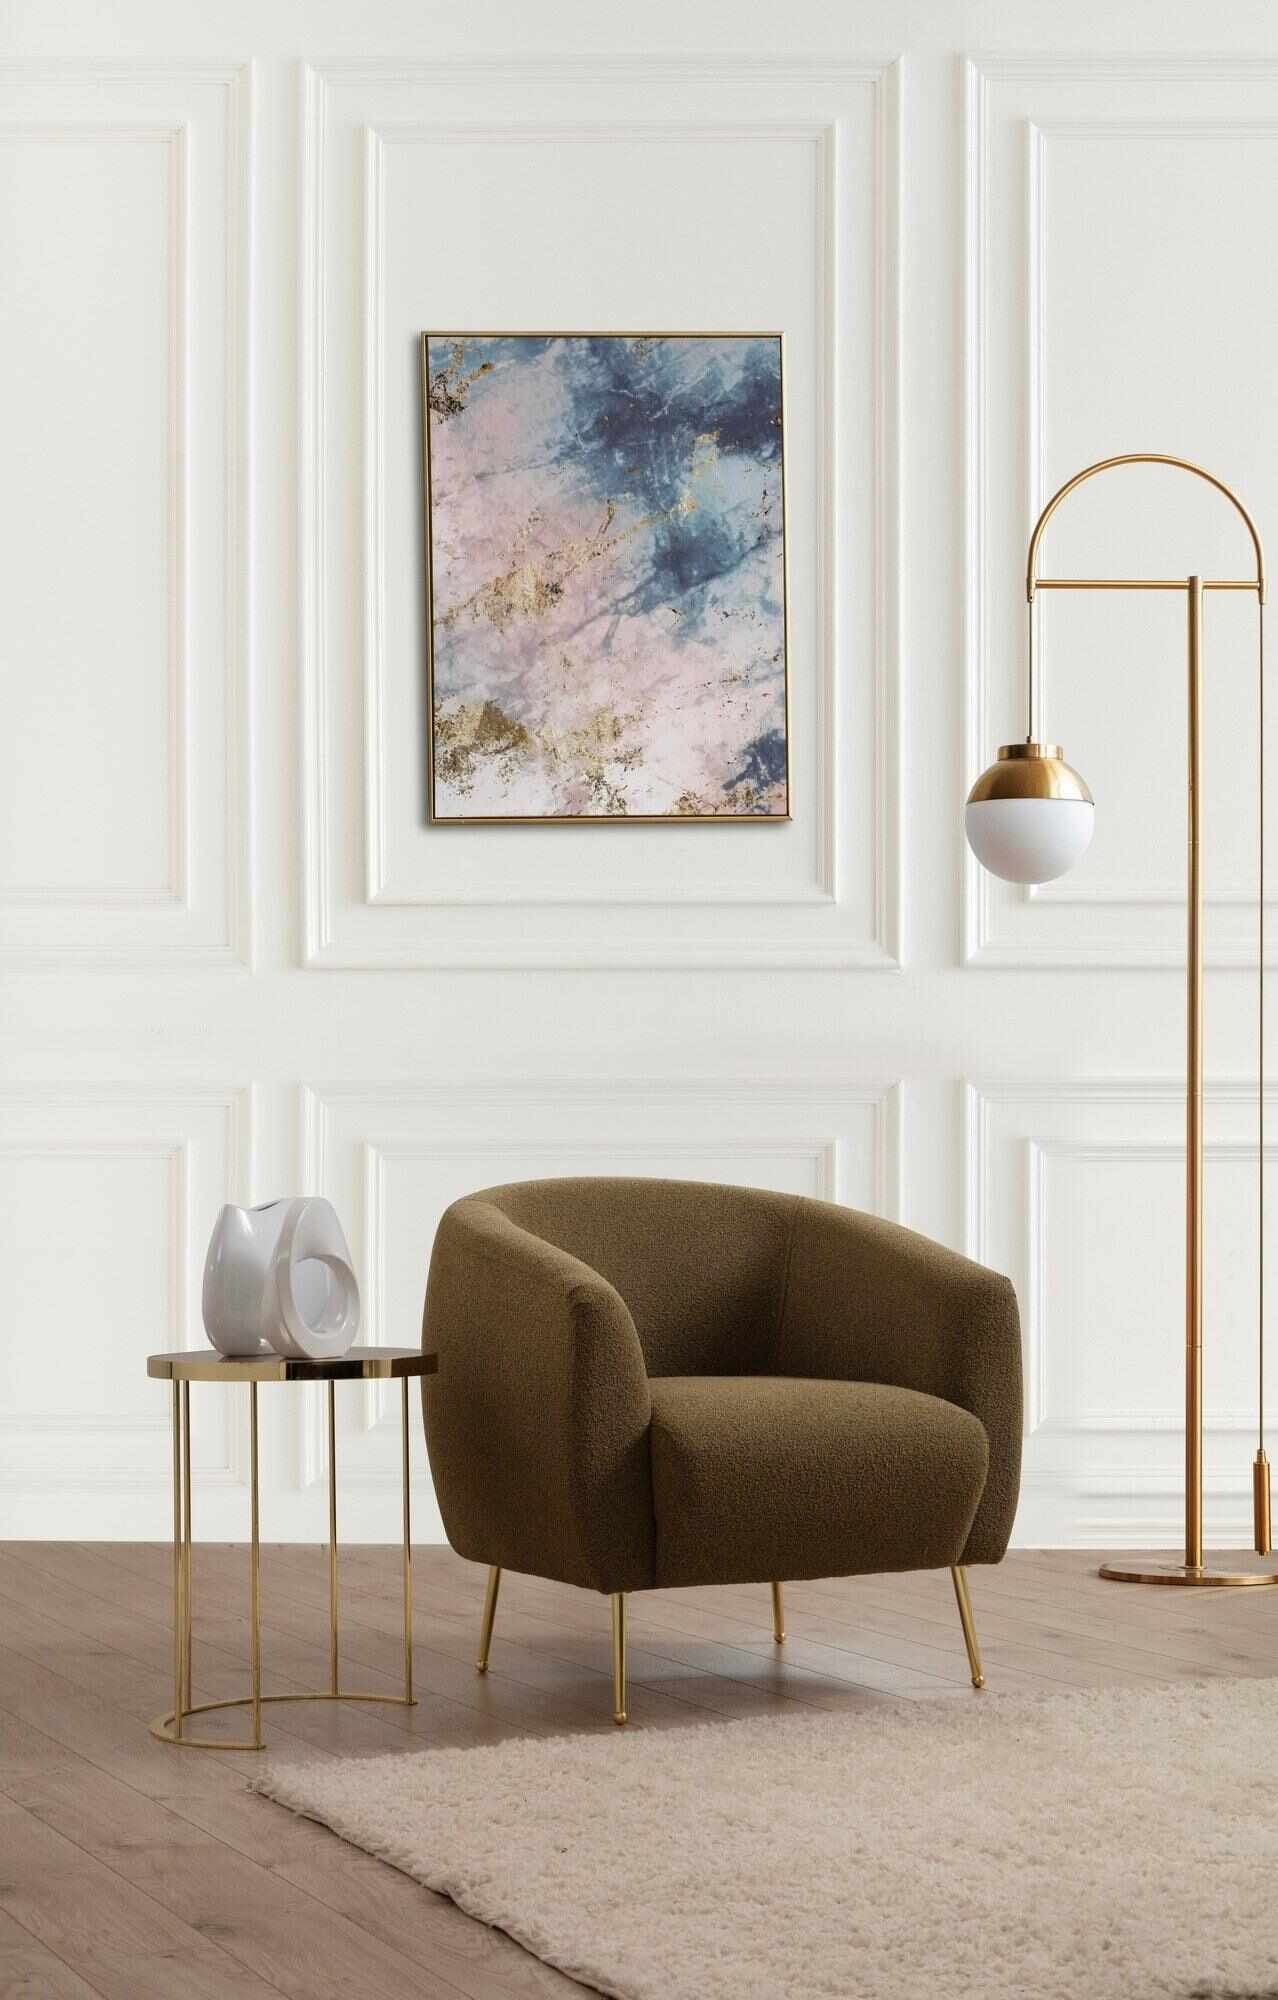 Fotoliu Eses Wing Chair, 70 x 82 x 82 cm